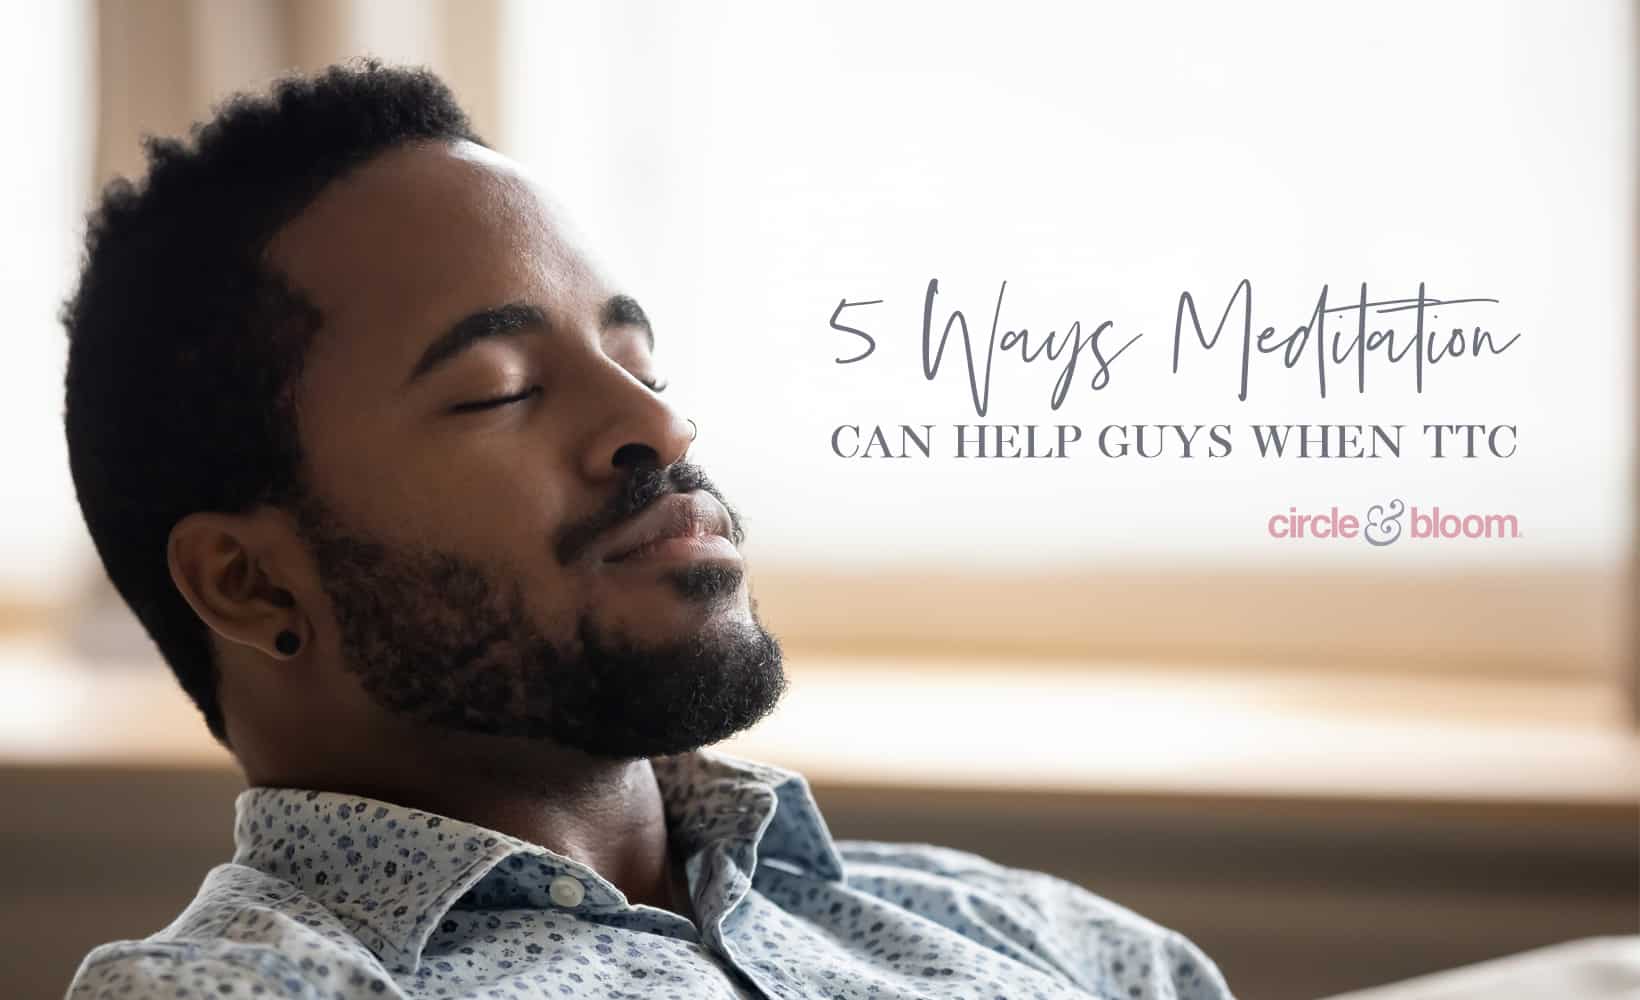 Calling All Men: 5 Ways Meditation Can Help You Through Infertility